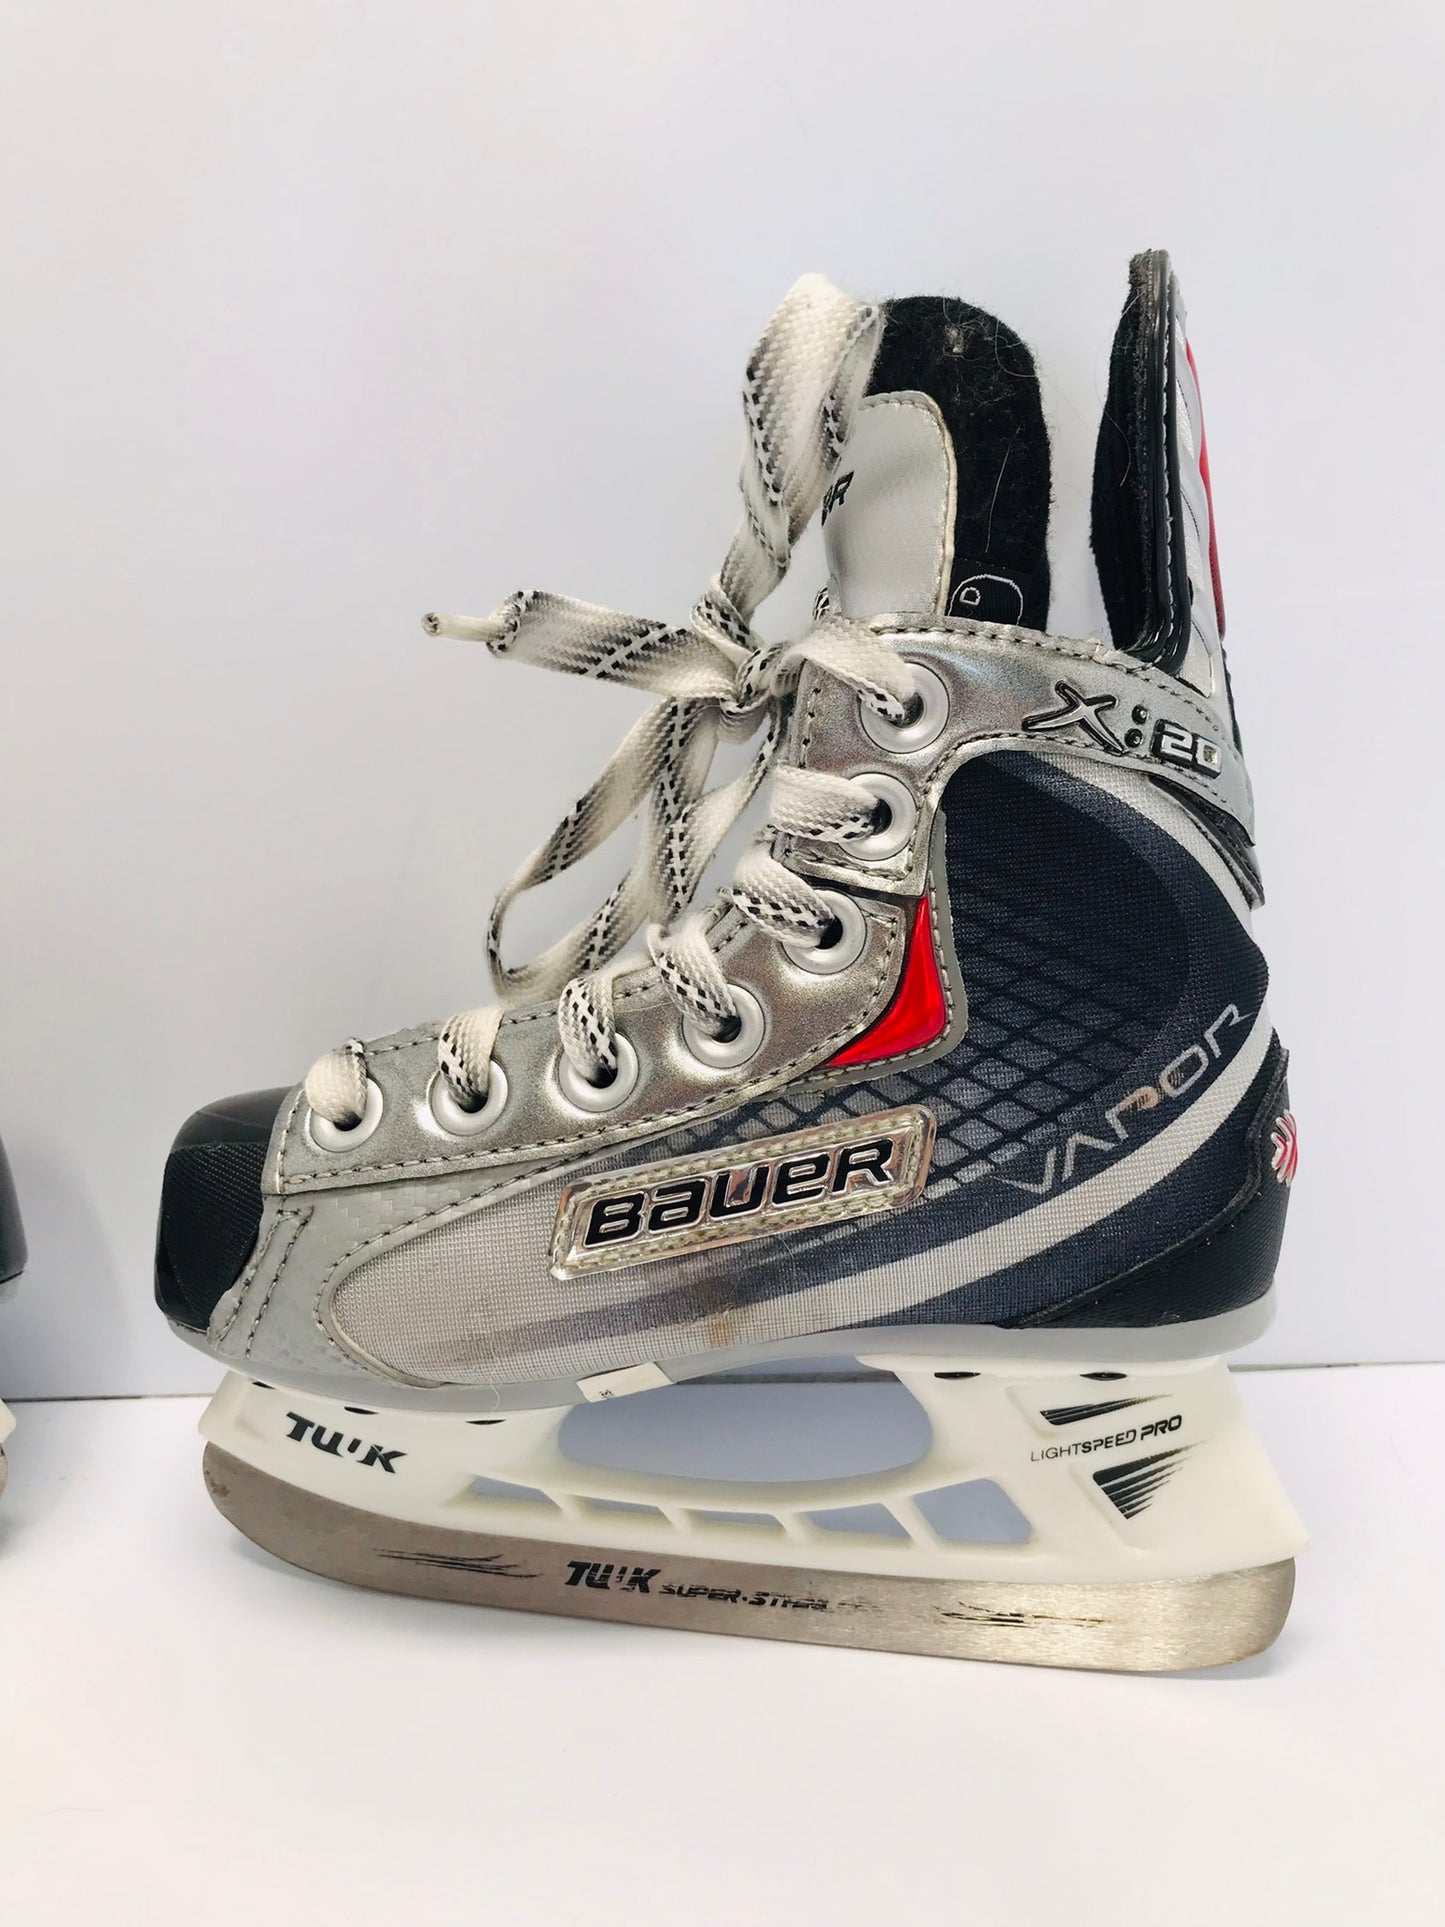 Hockey Skates Child Size 10 Shoe 9 Skate Bauer Vapor X20 Like New